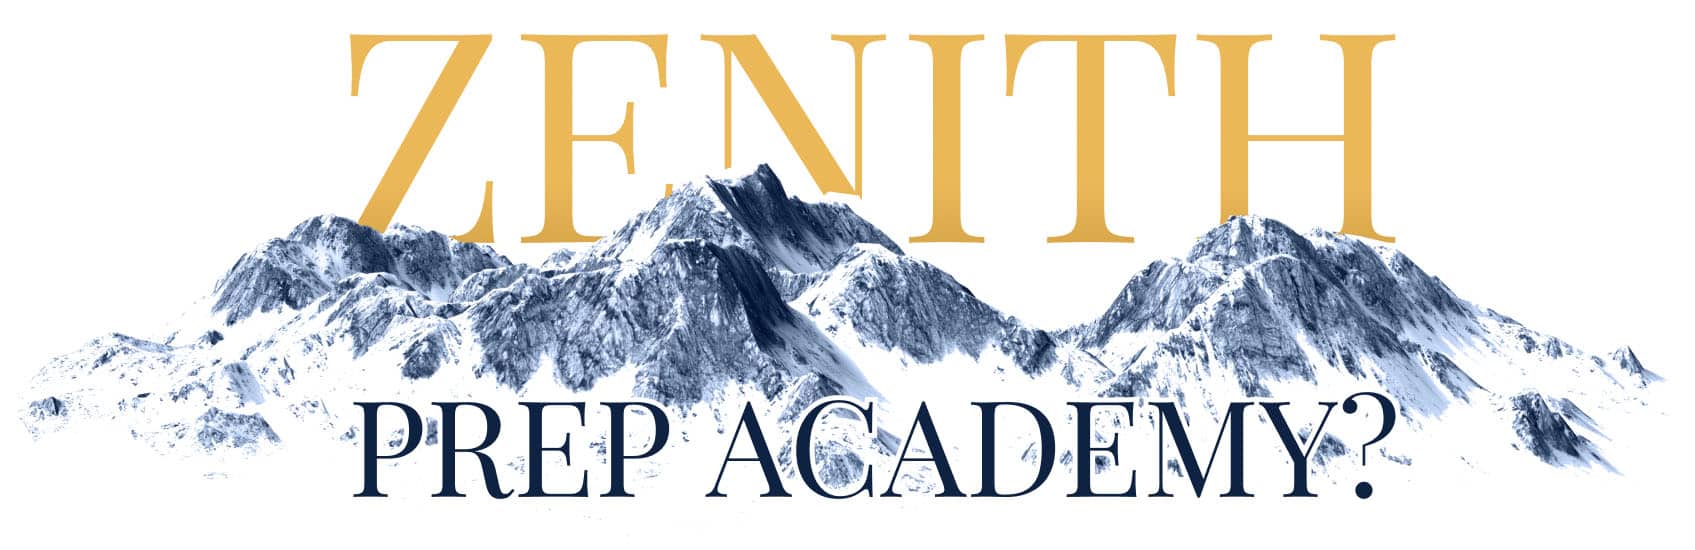 Zenith Prep Academy Text Image